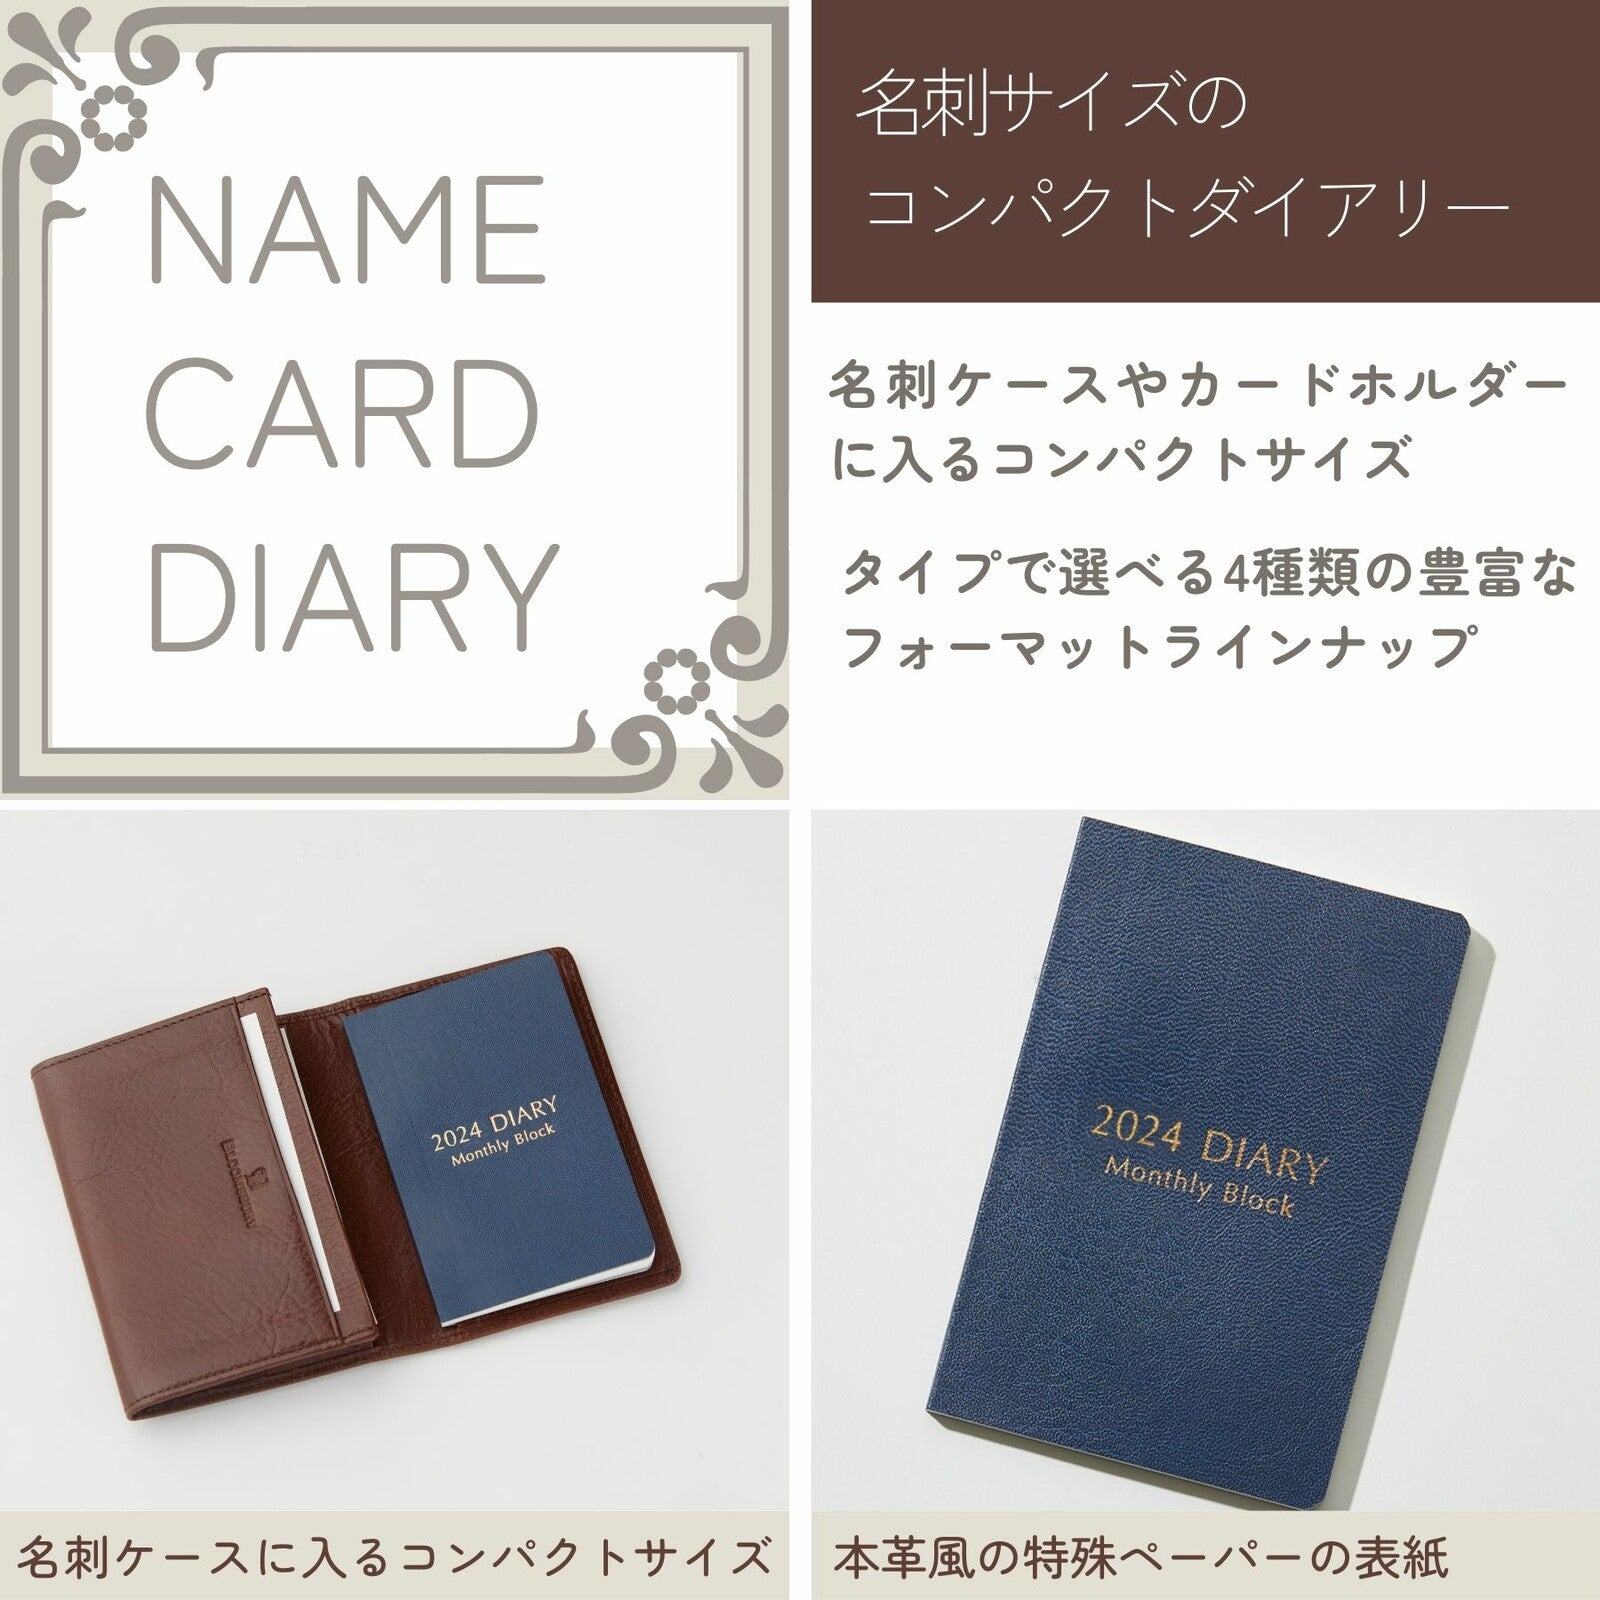 2024 Name Card Diary - Monthly Block - Techo Treats